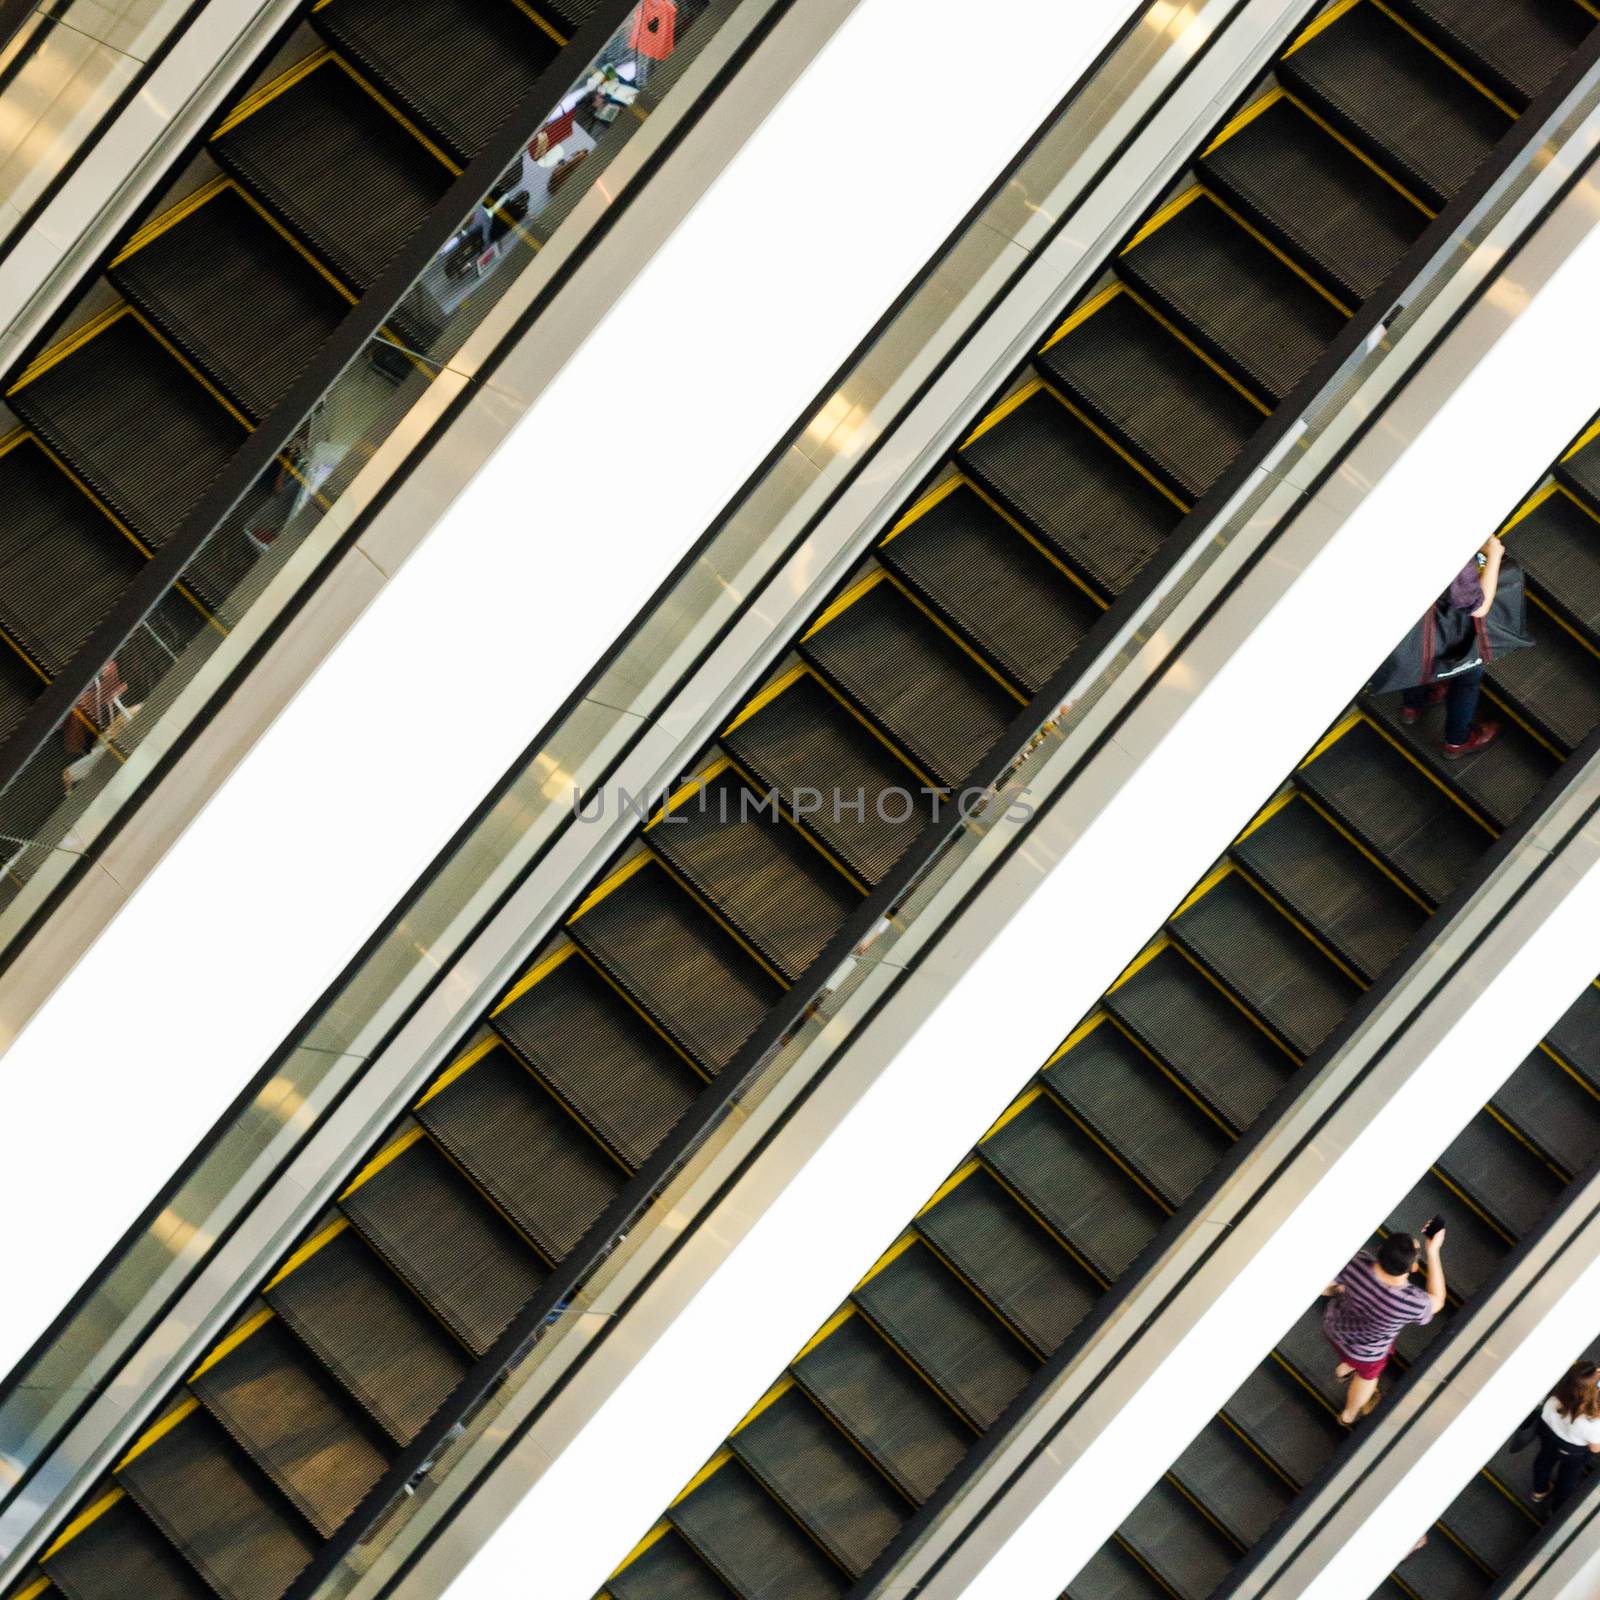 People on escalators by siraanamwong